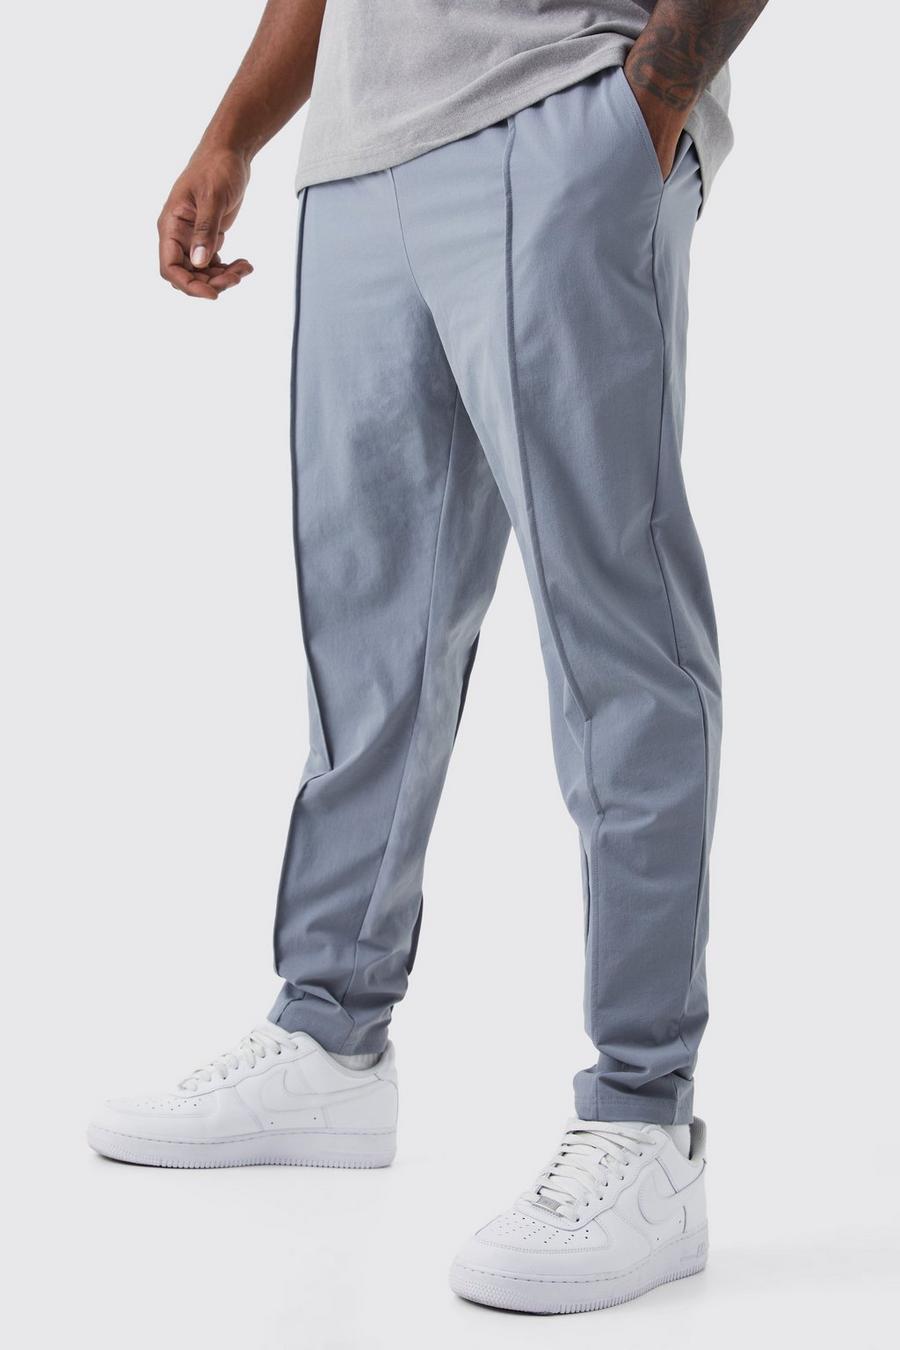 Pantalón Plus pitillo elástico ligero con alforza, Light grey